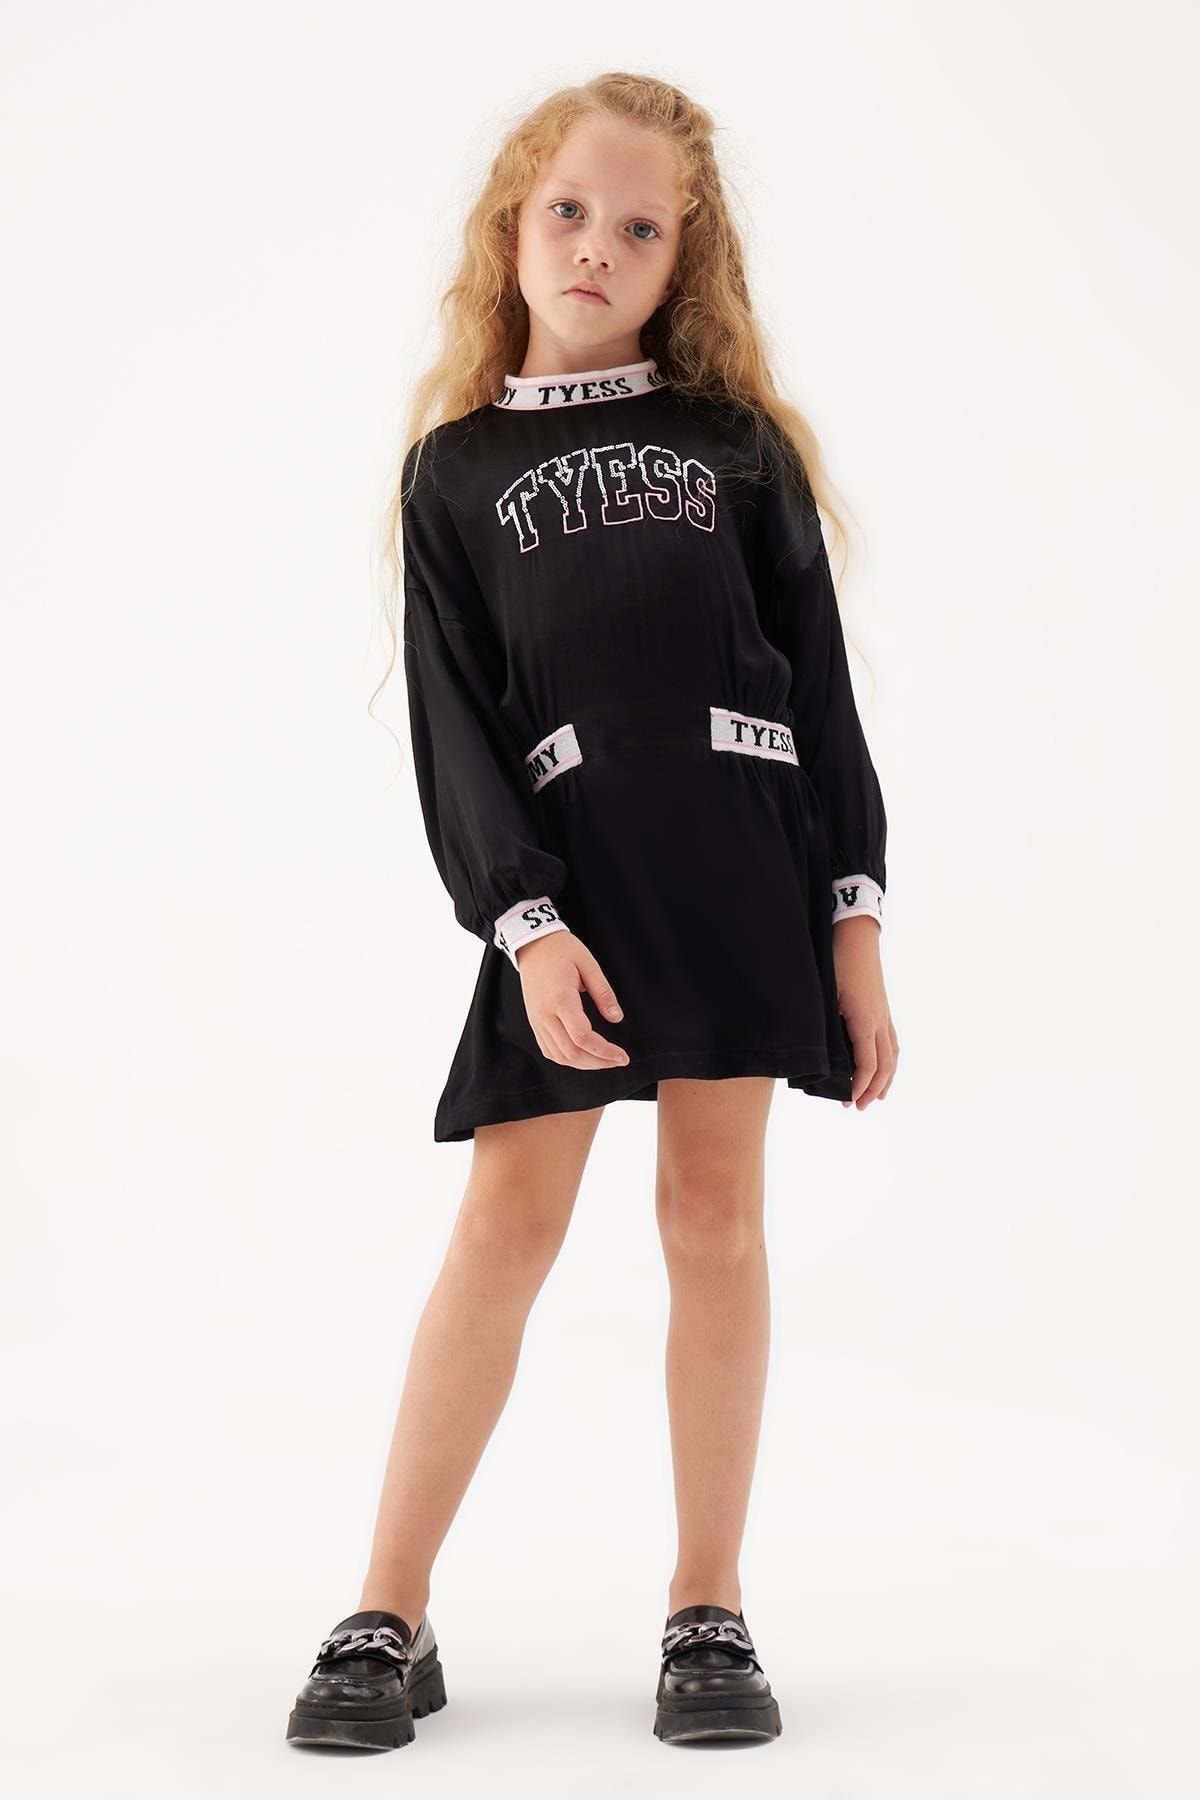 Tyess Kız Çocuk Siyah Elbise